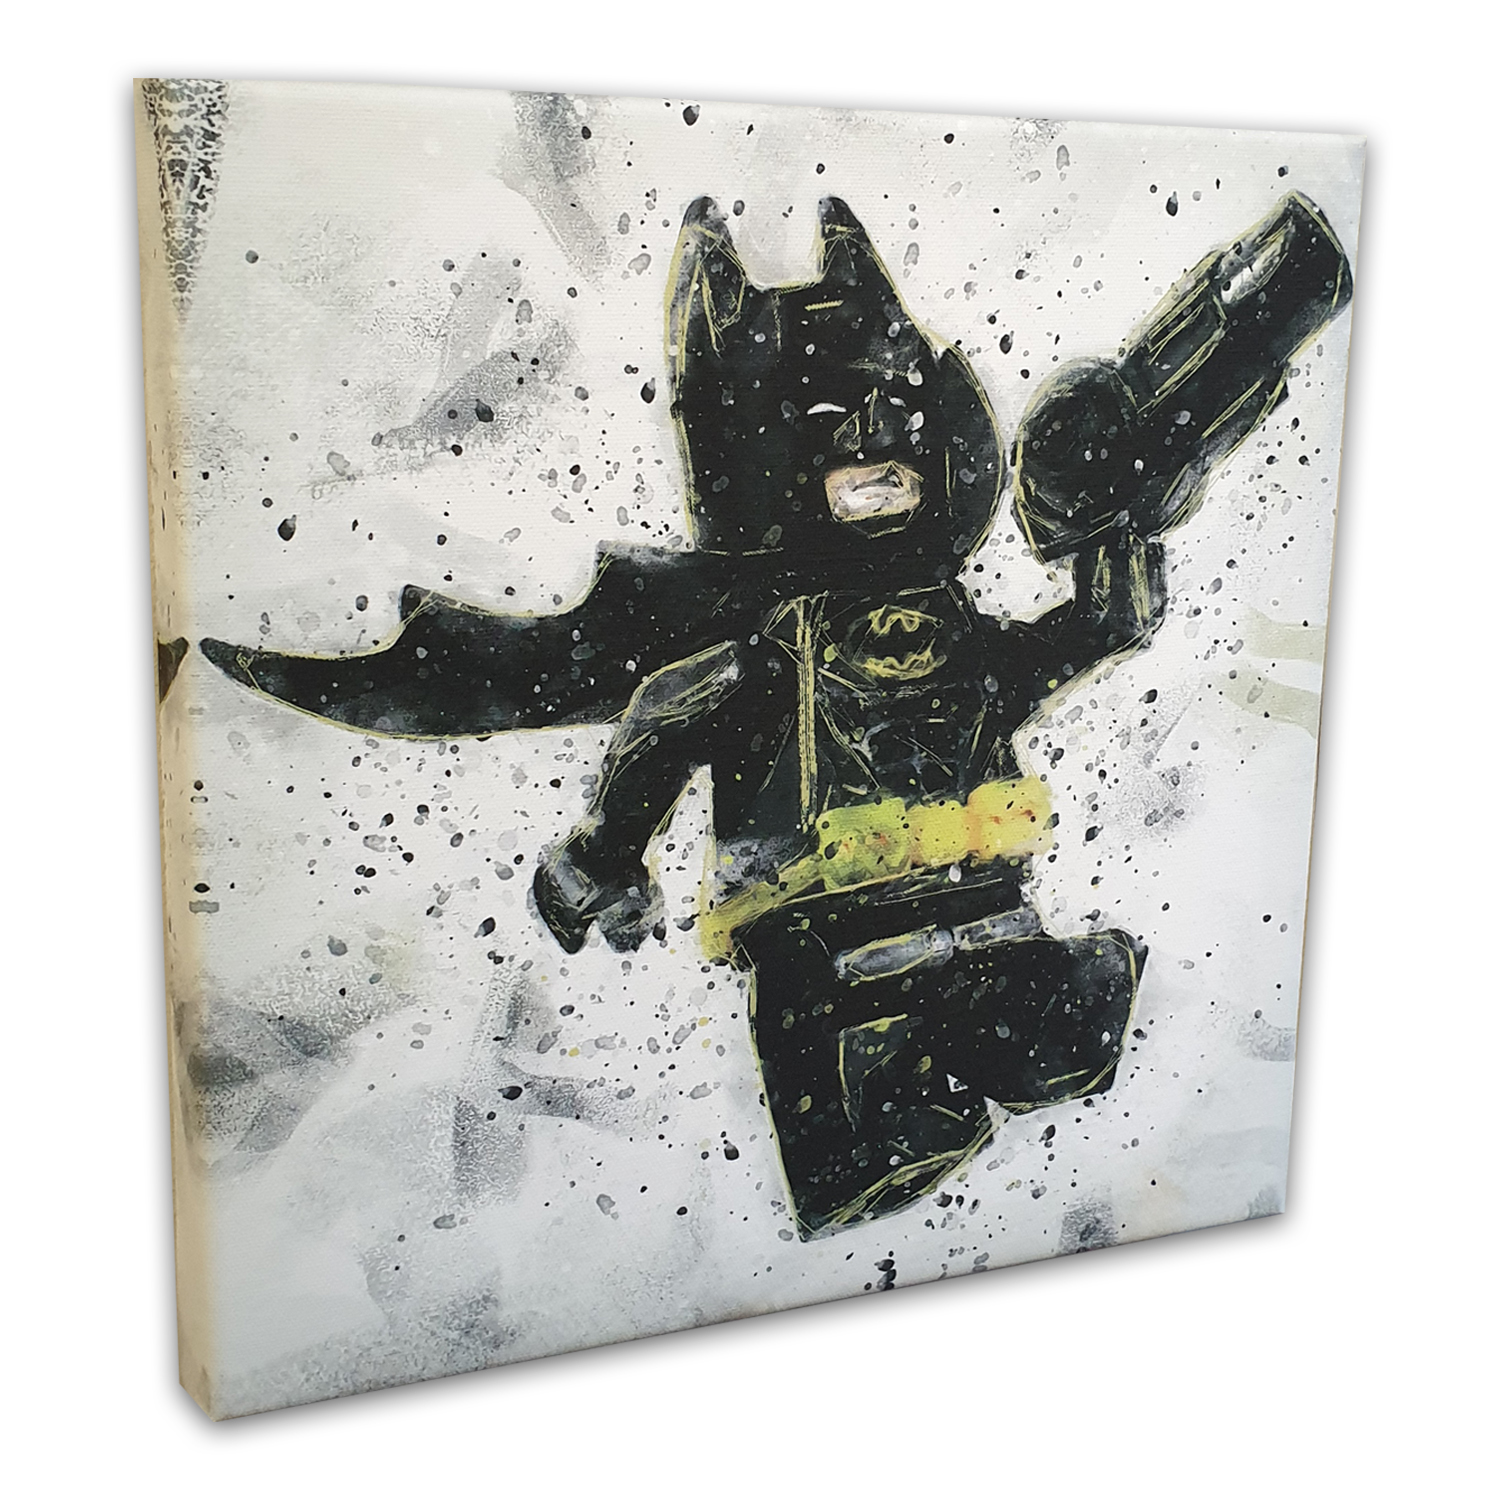 Lego Batman Canvas Print 12×12 inches - To Do Designs